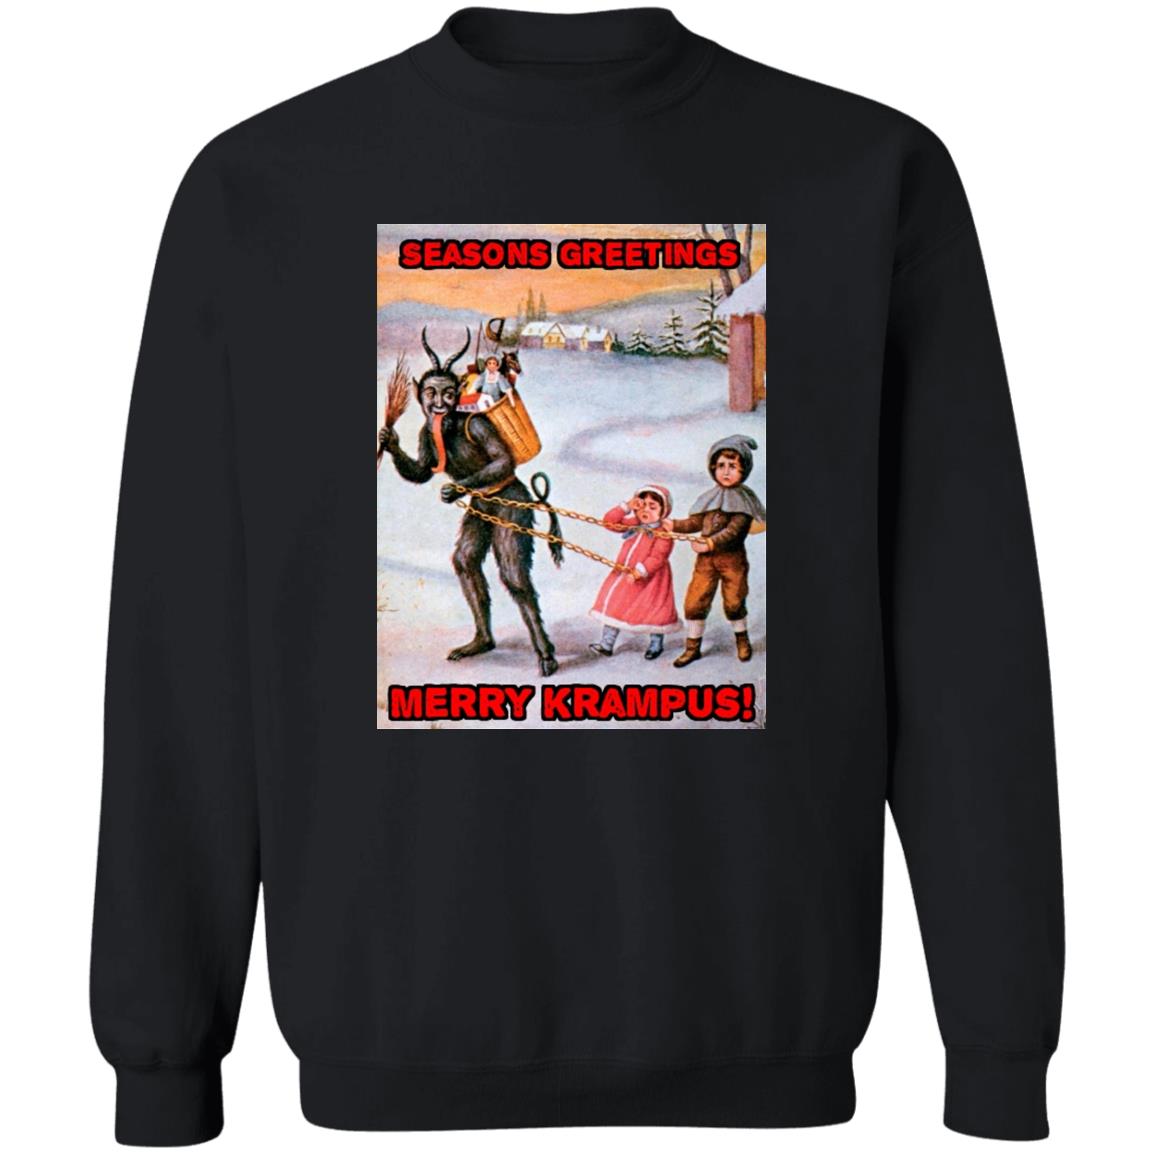 Evil Christmas Horror Sweatshirt, Krampus Shirt, Seasons Greetings, Merry Krampus Holiday Sweatshirt